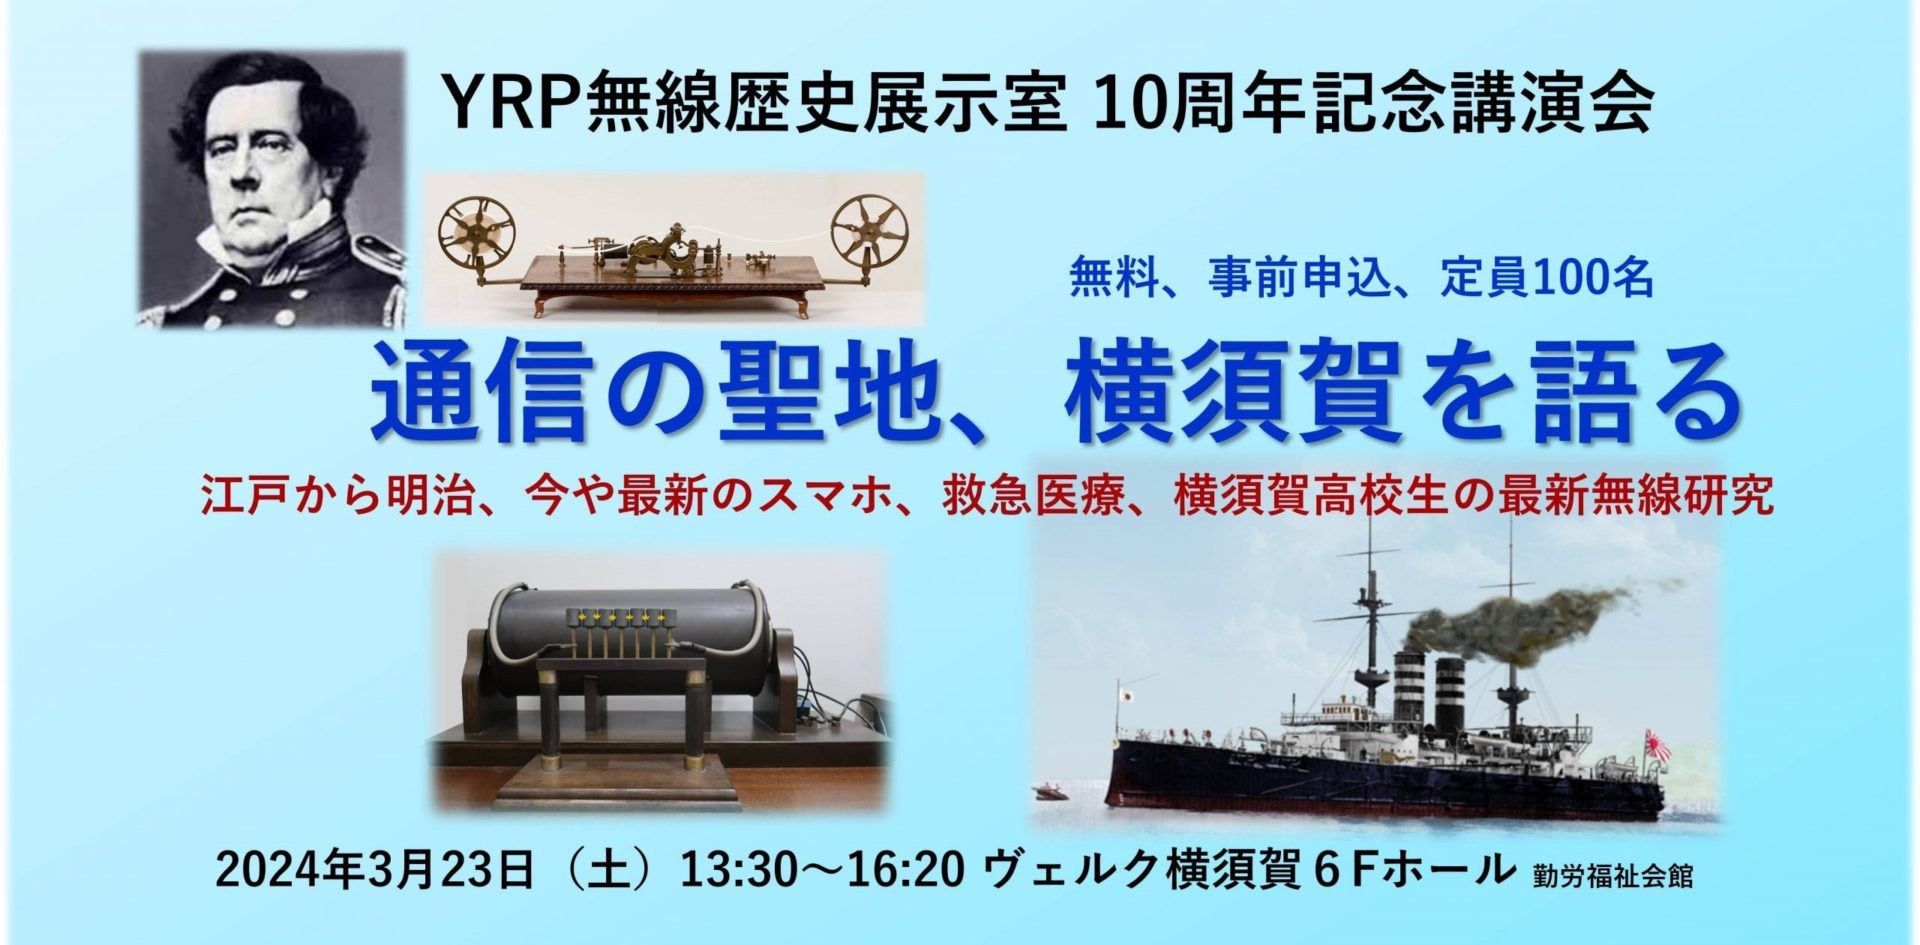 YRP無線歴史展示室10周年記念講演会「通信の聖地、横須賀を語る」